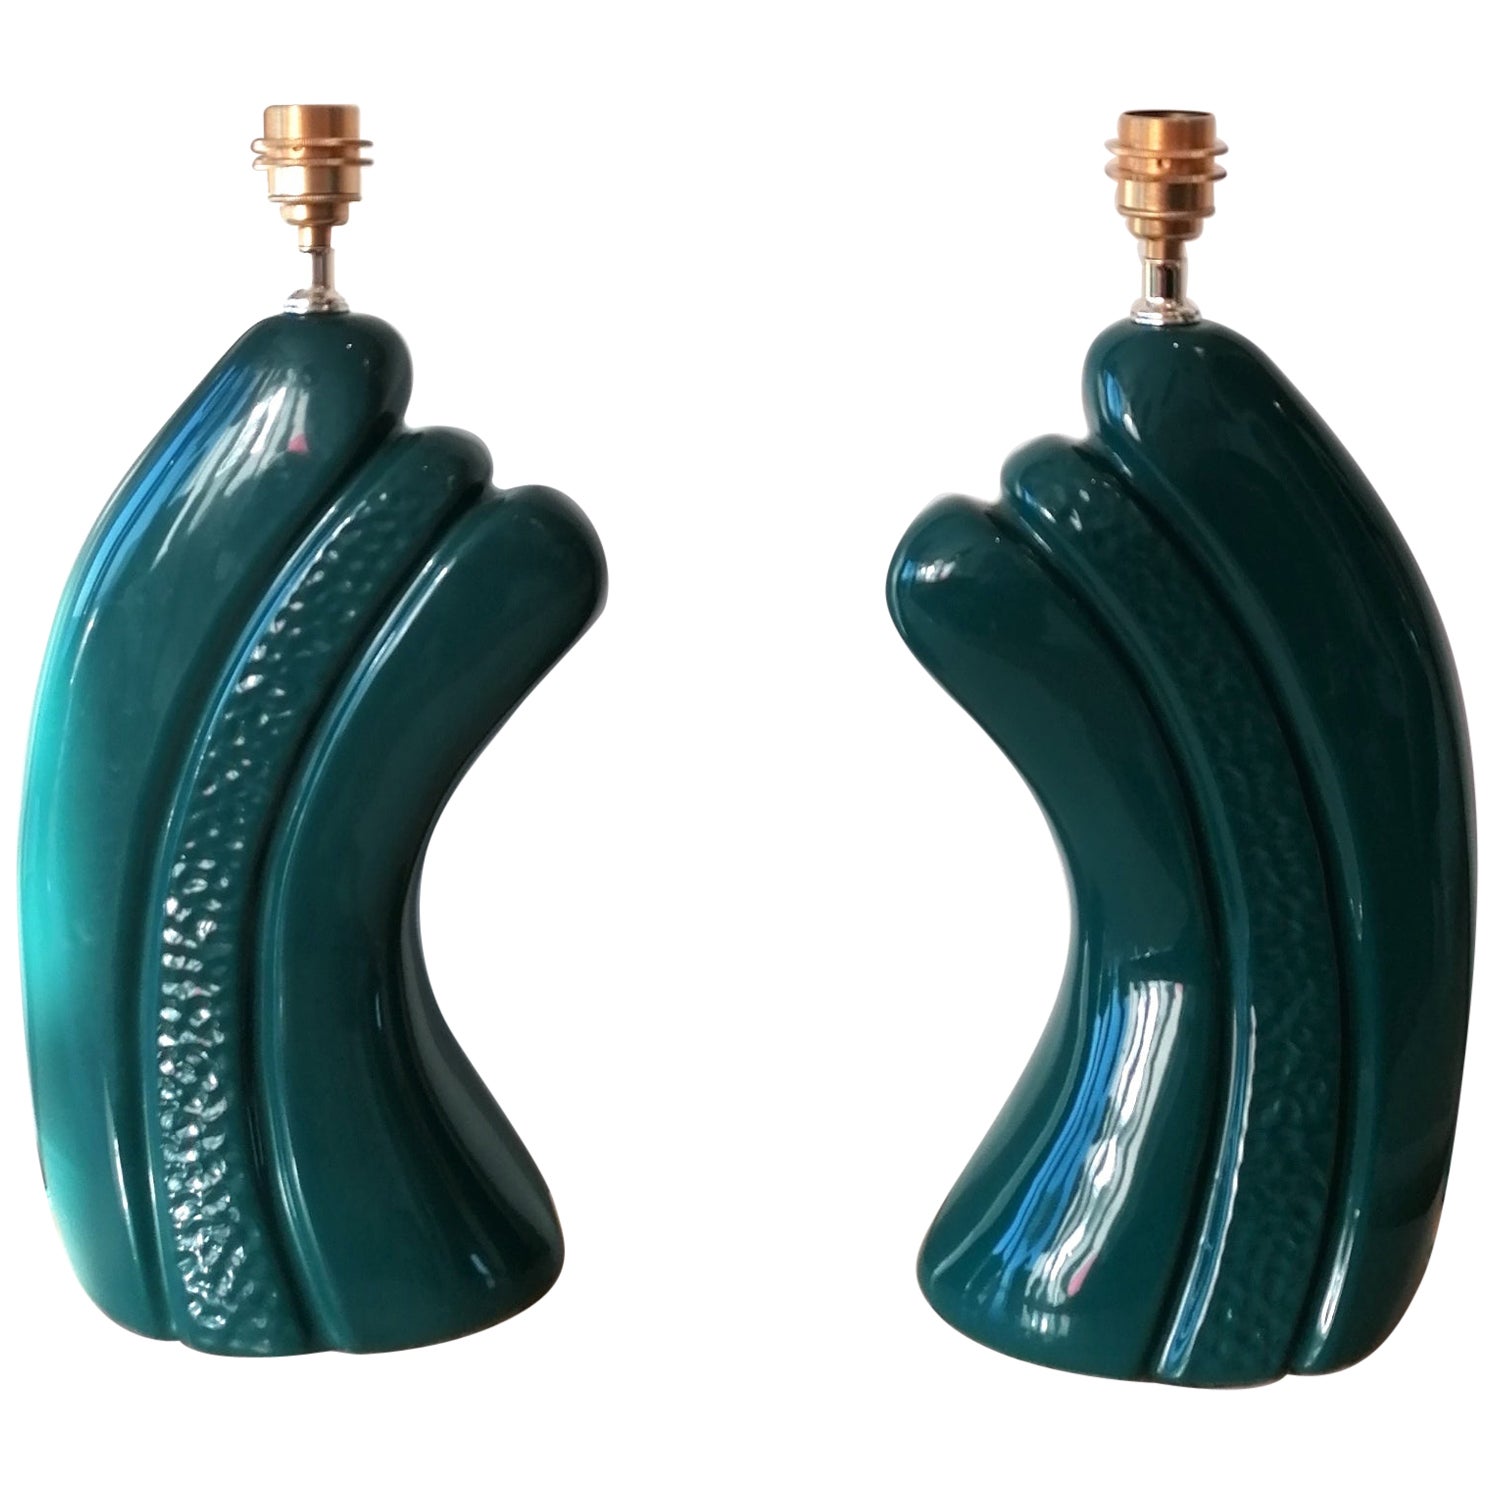 Pair of Dark, Intense Blue / Green Ceramic Lamps, USA 1980s Art Deco Revival For Sale